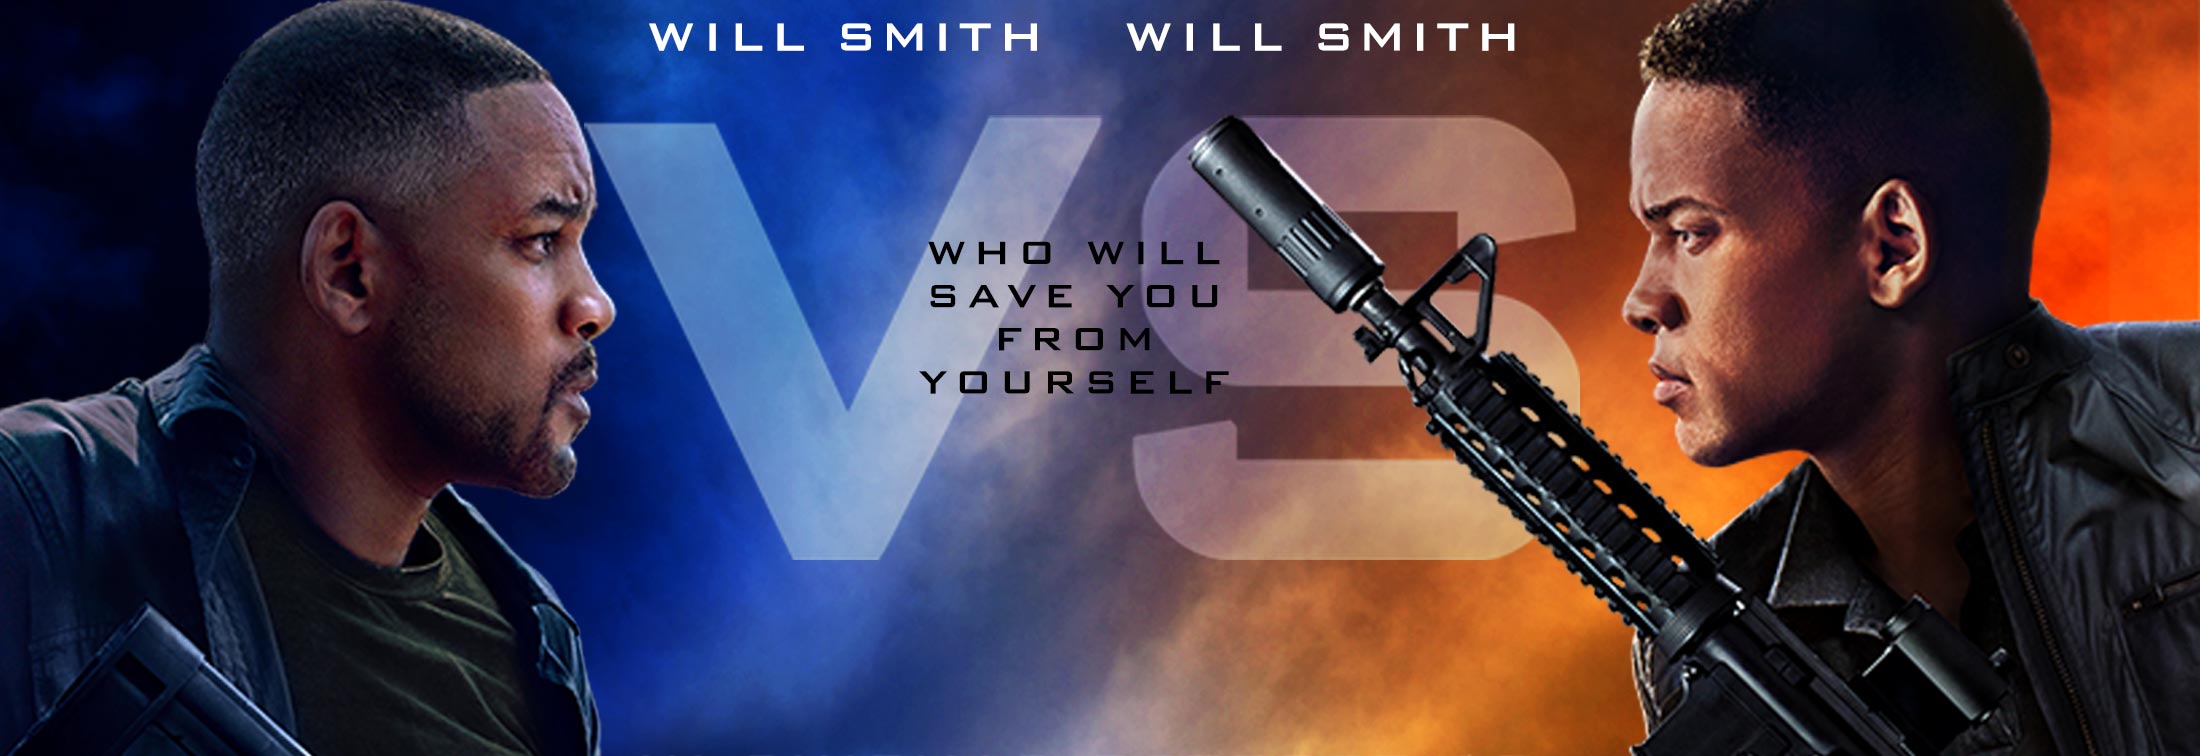 Gemini Man - Will Smith's innovative action thriller